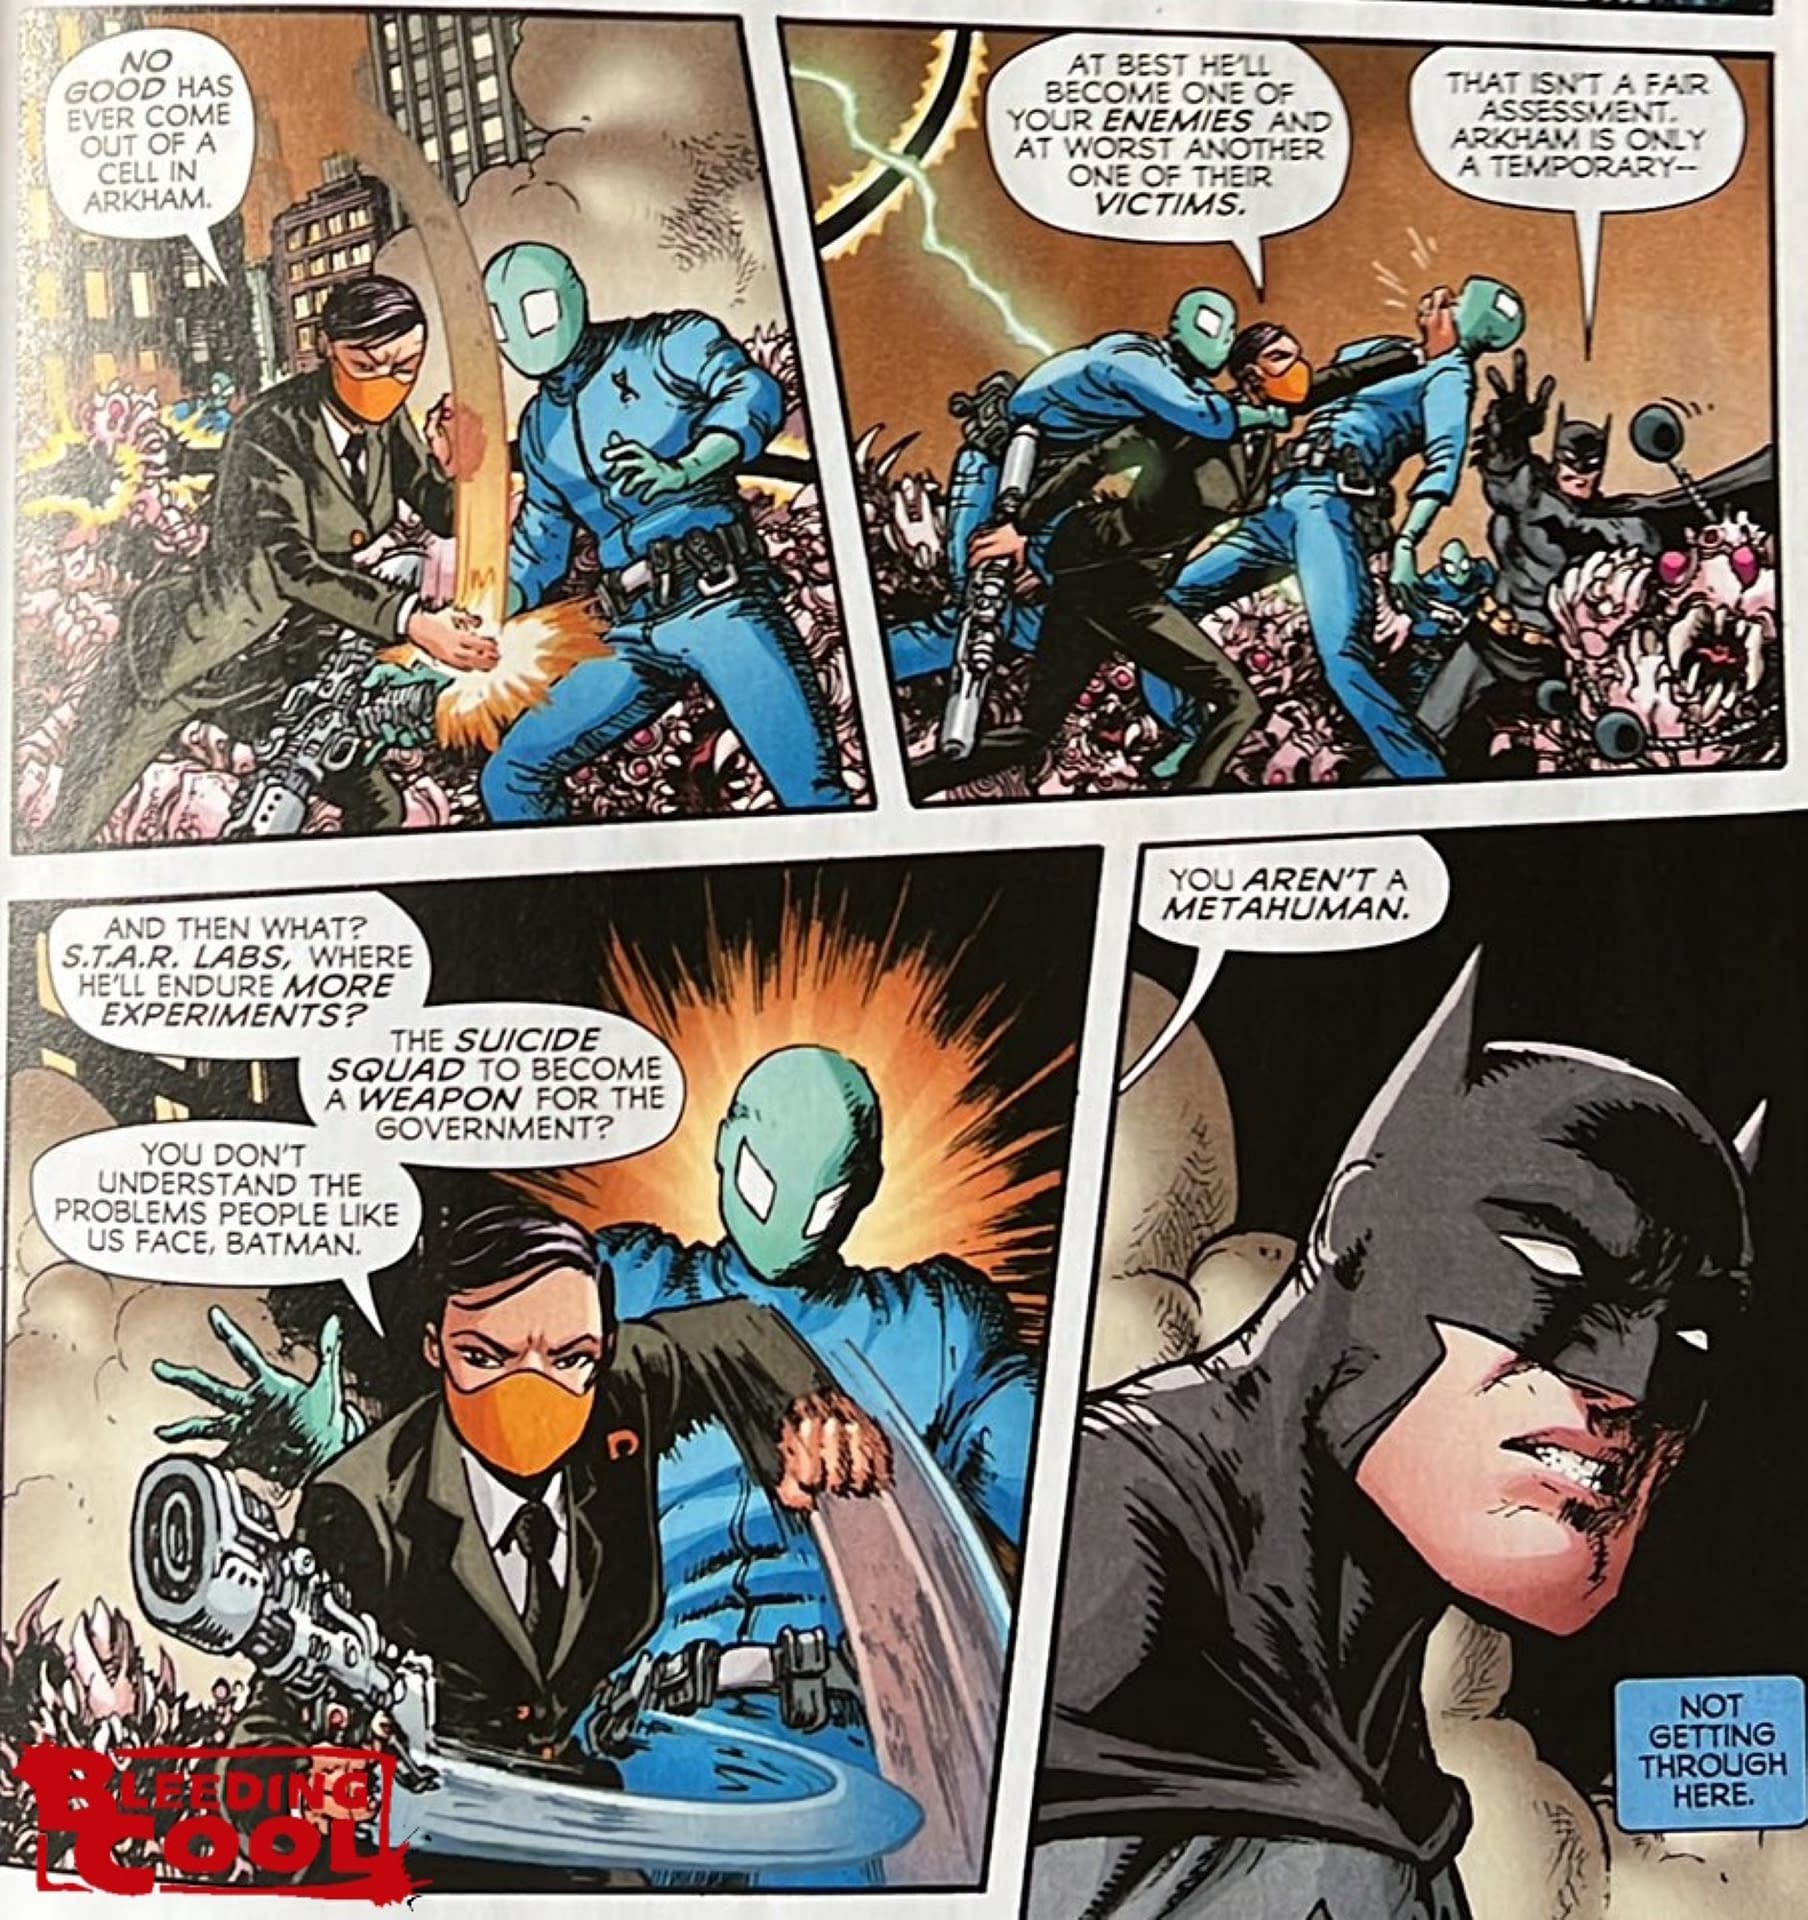 DC Comics' Doom Patrol Criticises Batman For Not Being Woke (Spoilers)